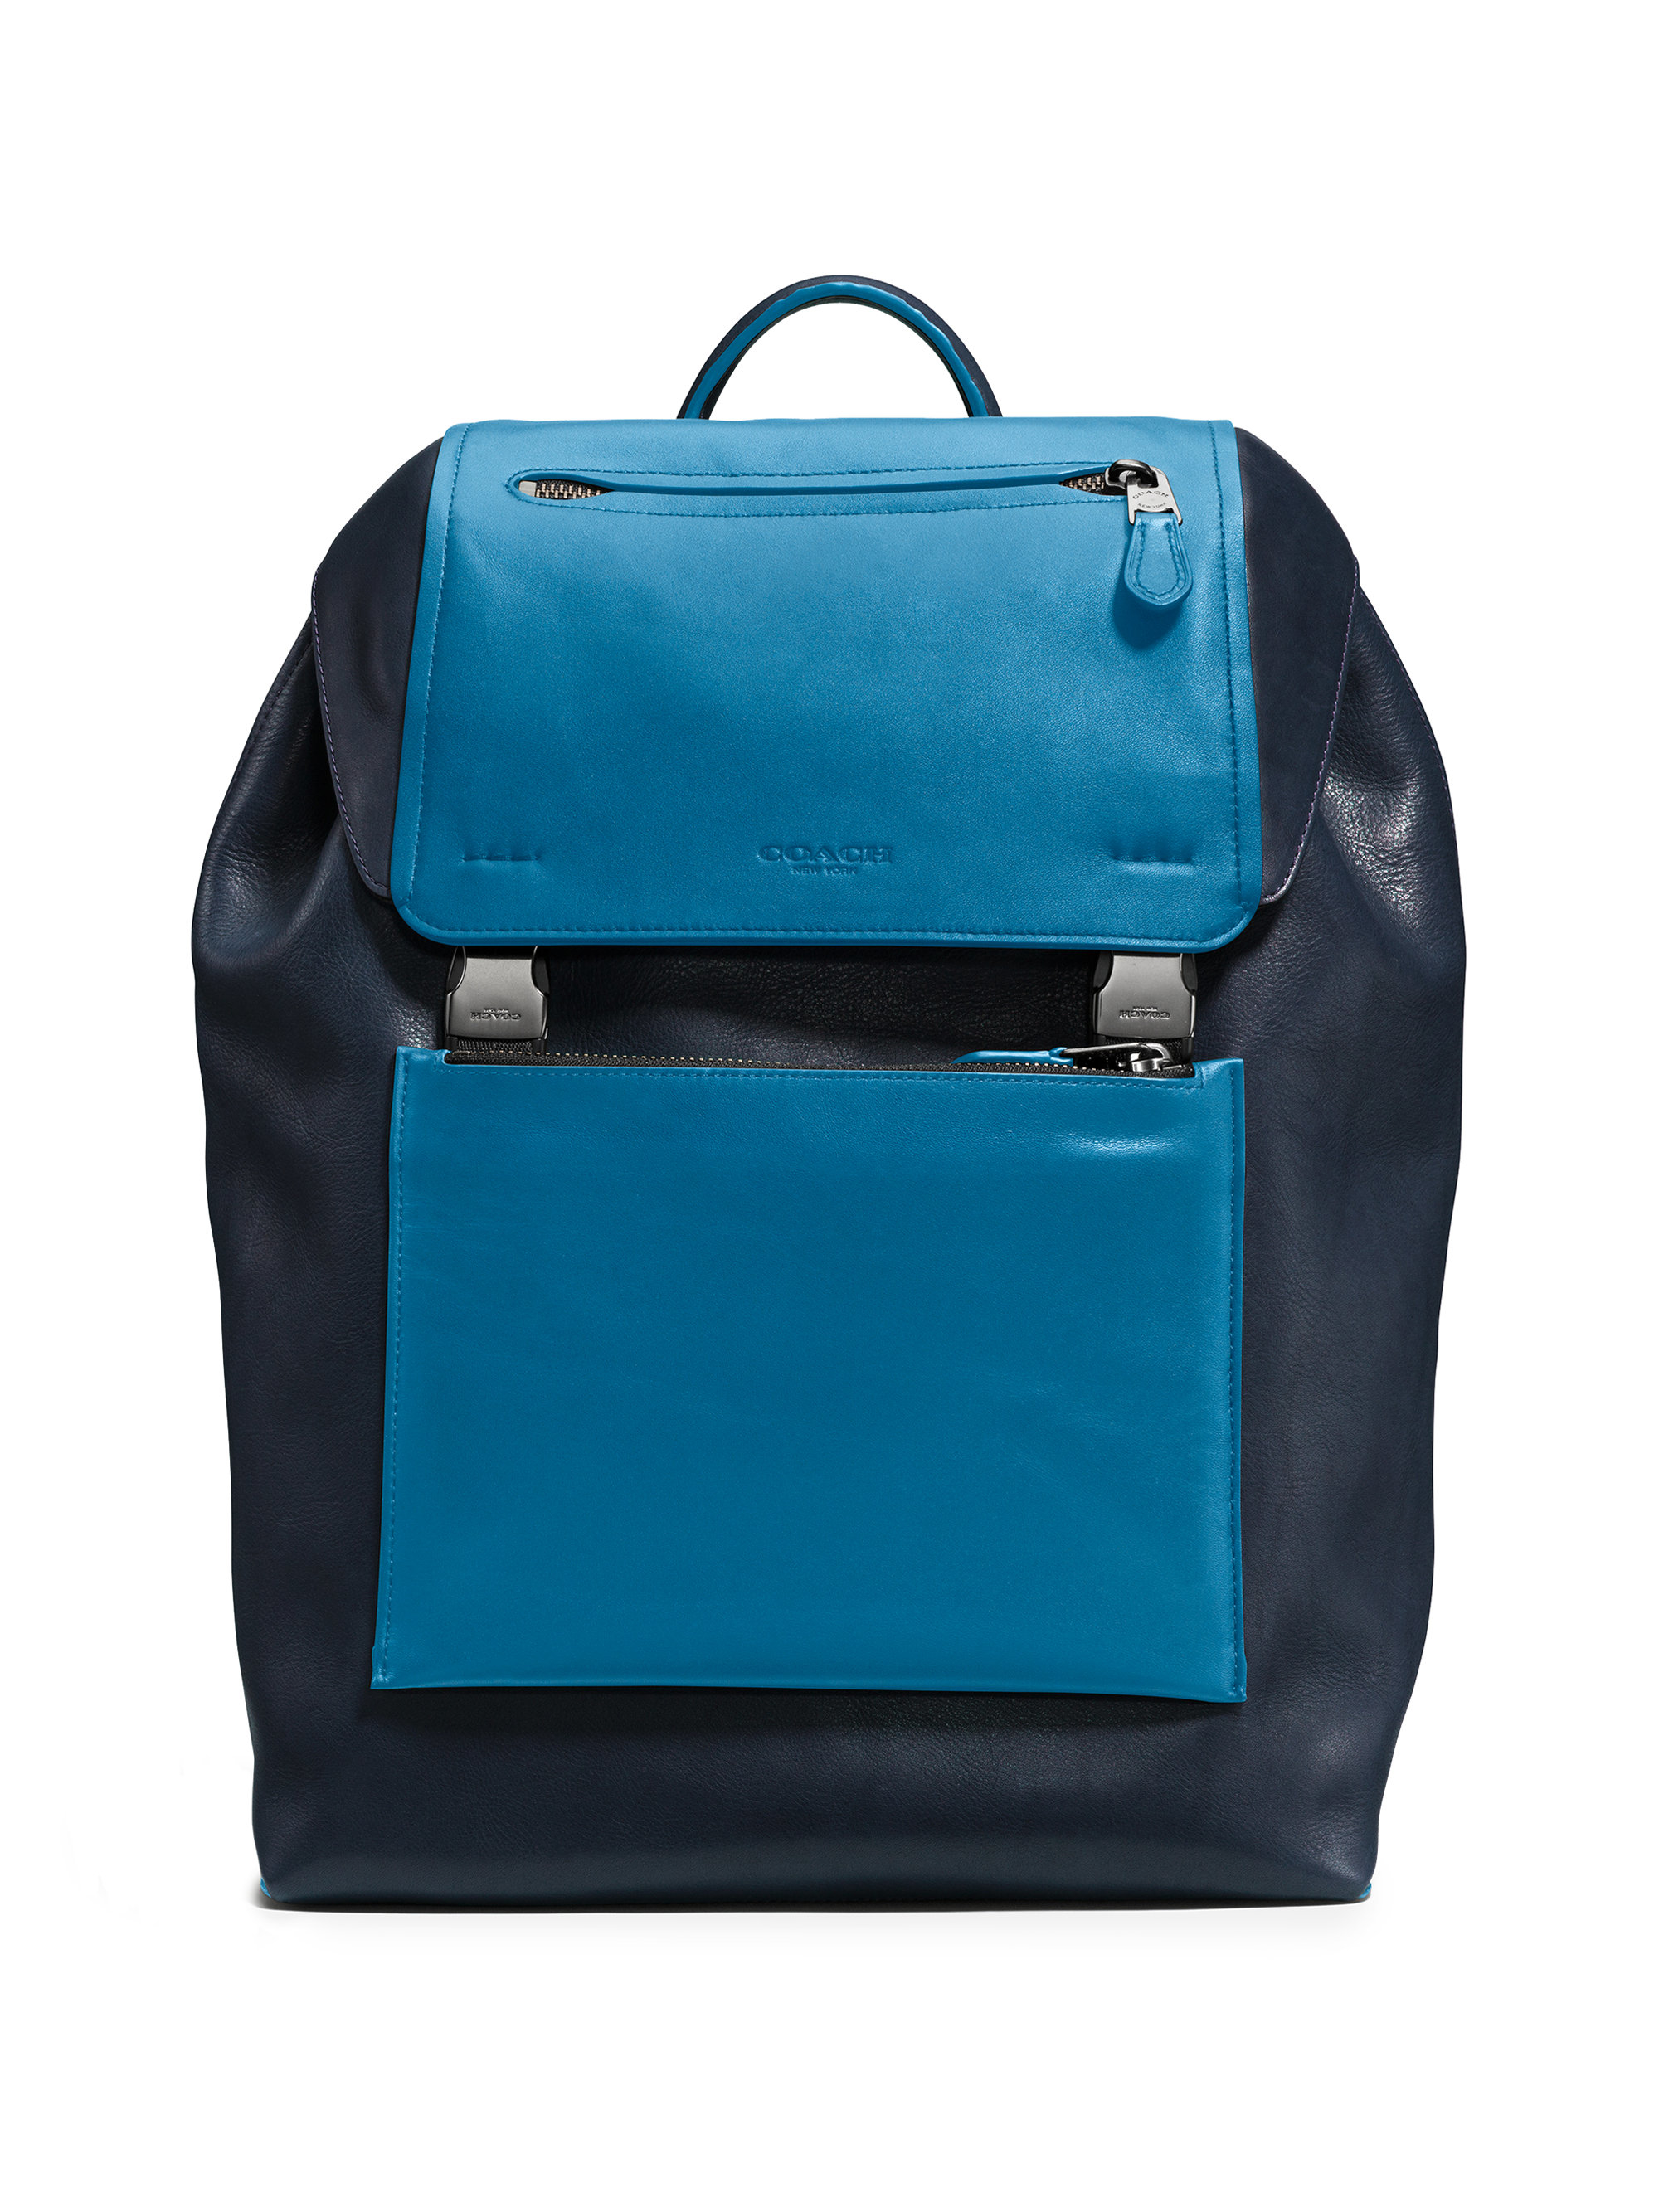 Lyst - Coach Manhattan Backpack in Blue for Men